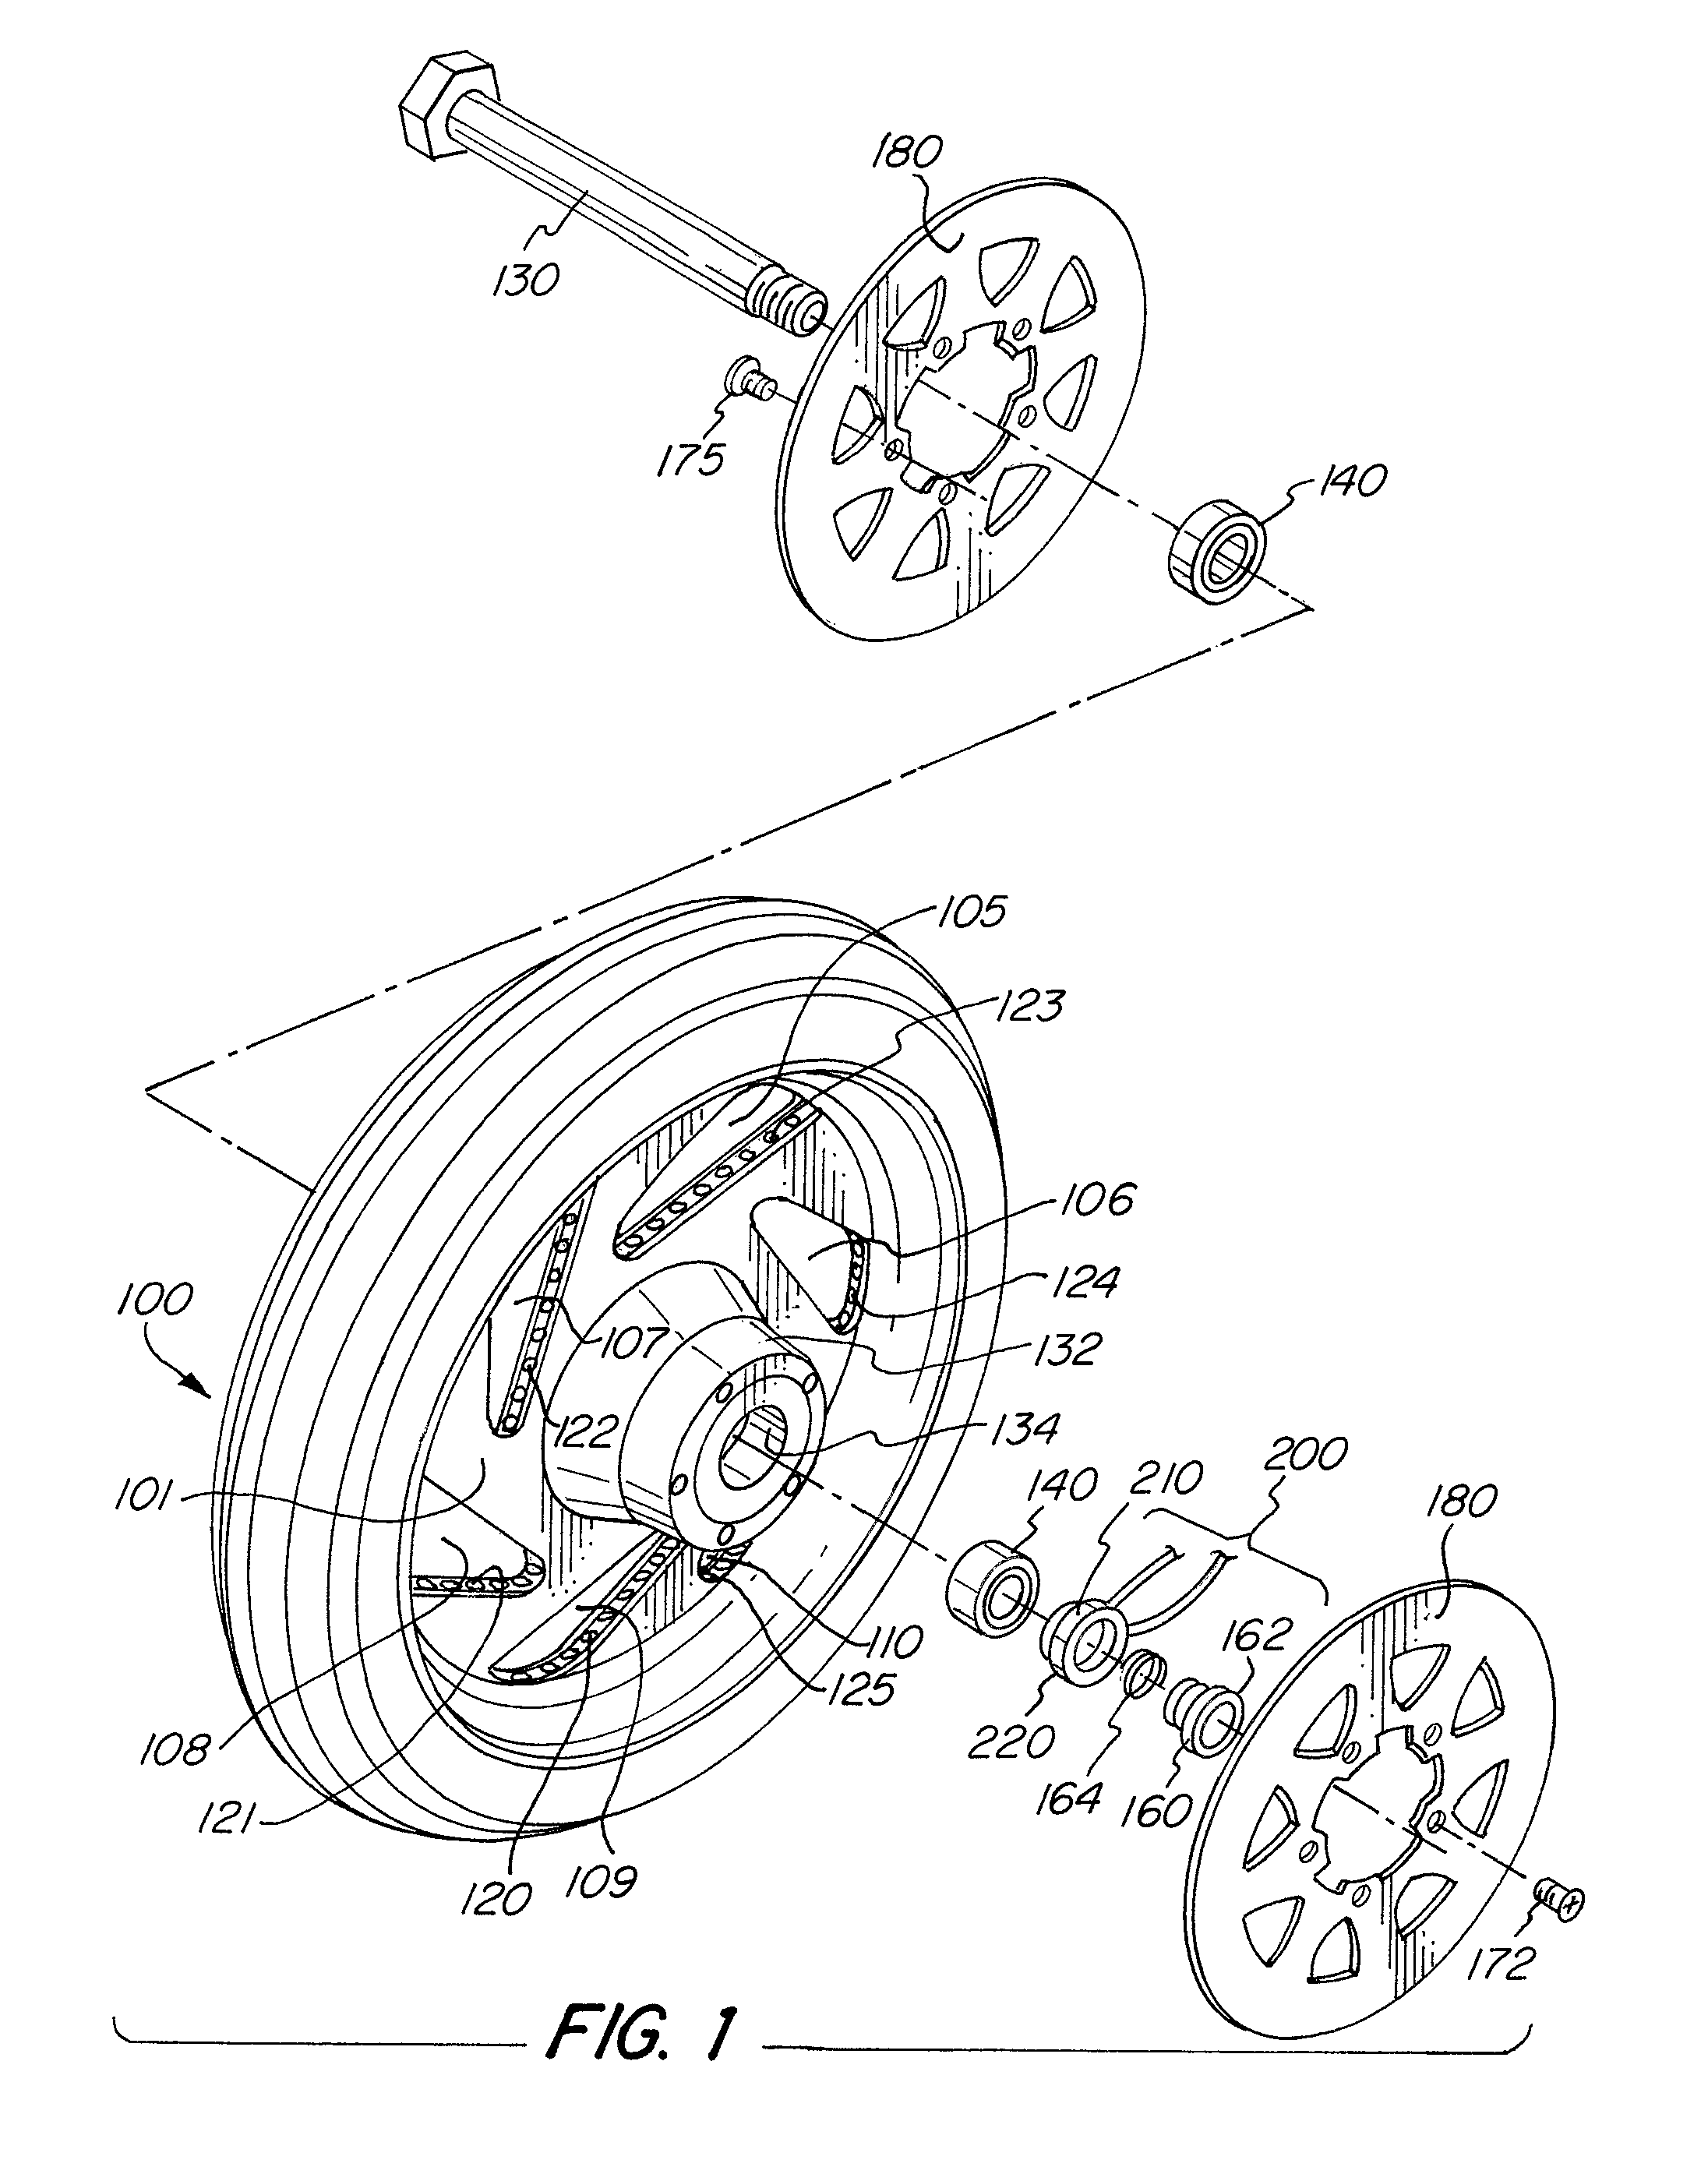 Illuminated vehicle wheel with bearing seal slip ring assembly